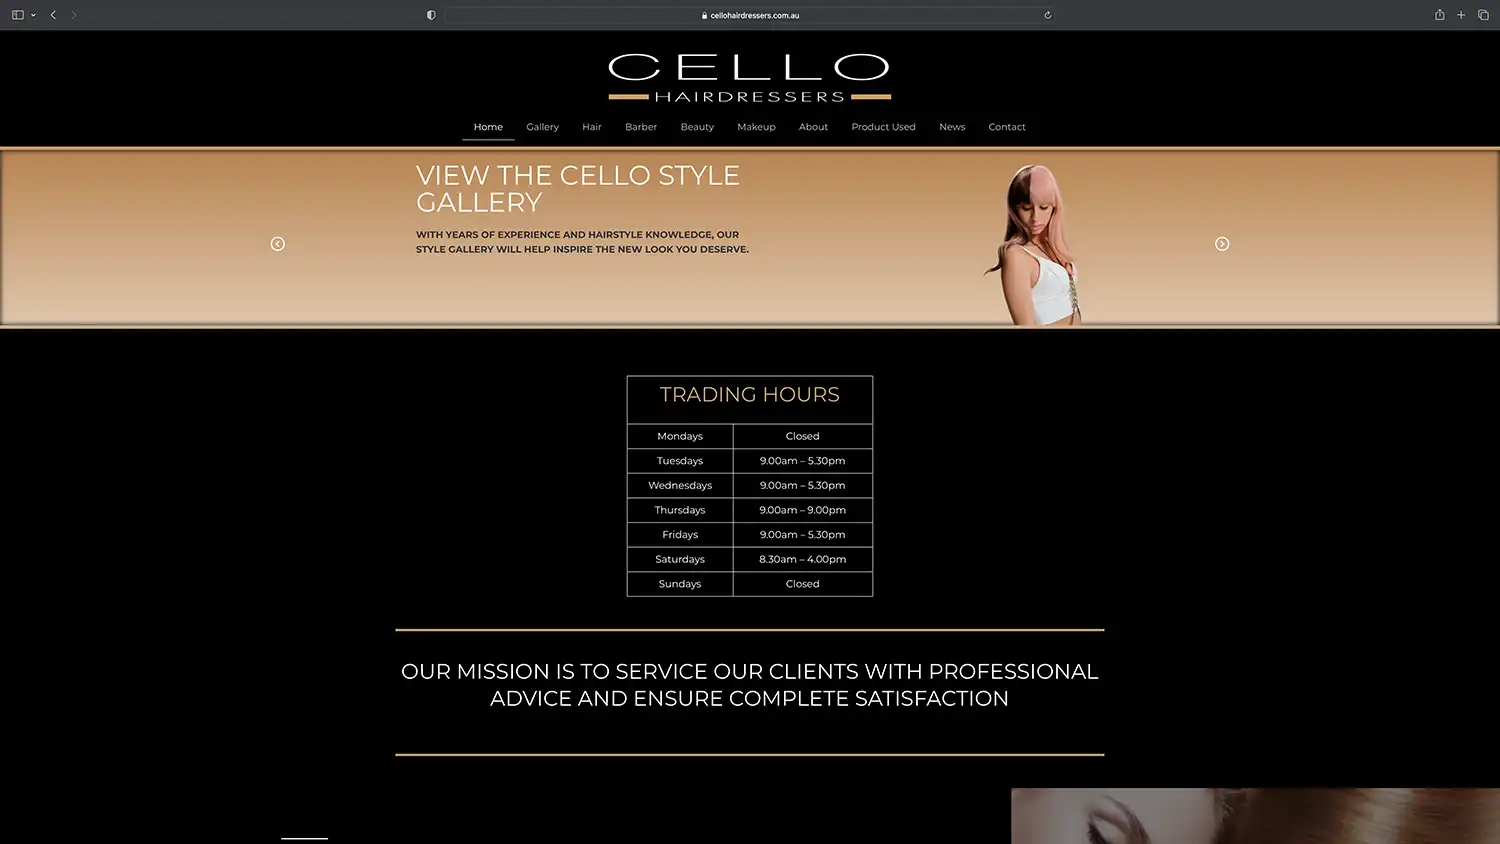 Cello Hairdressers website